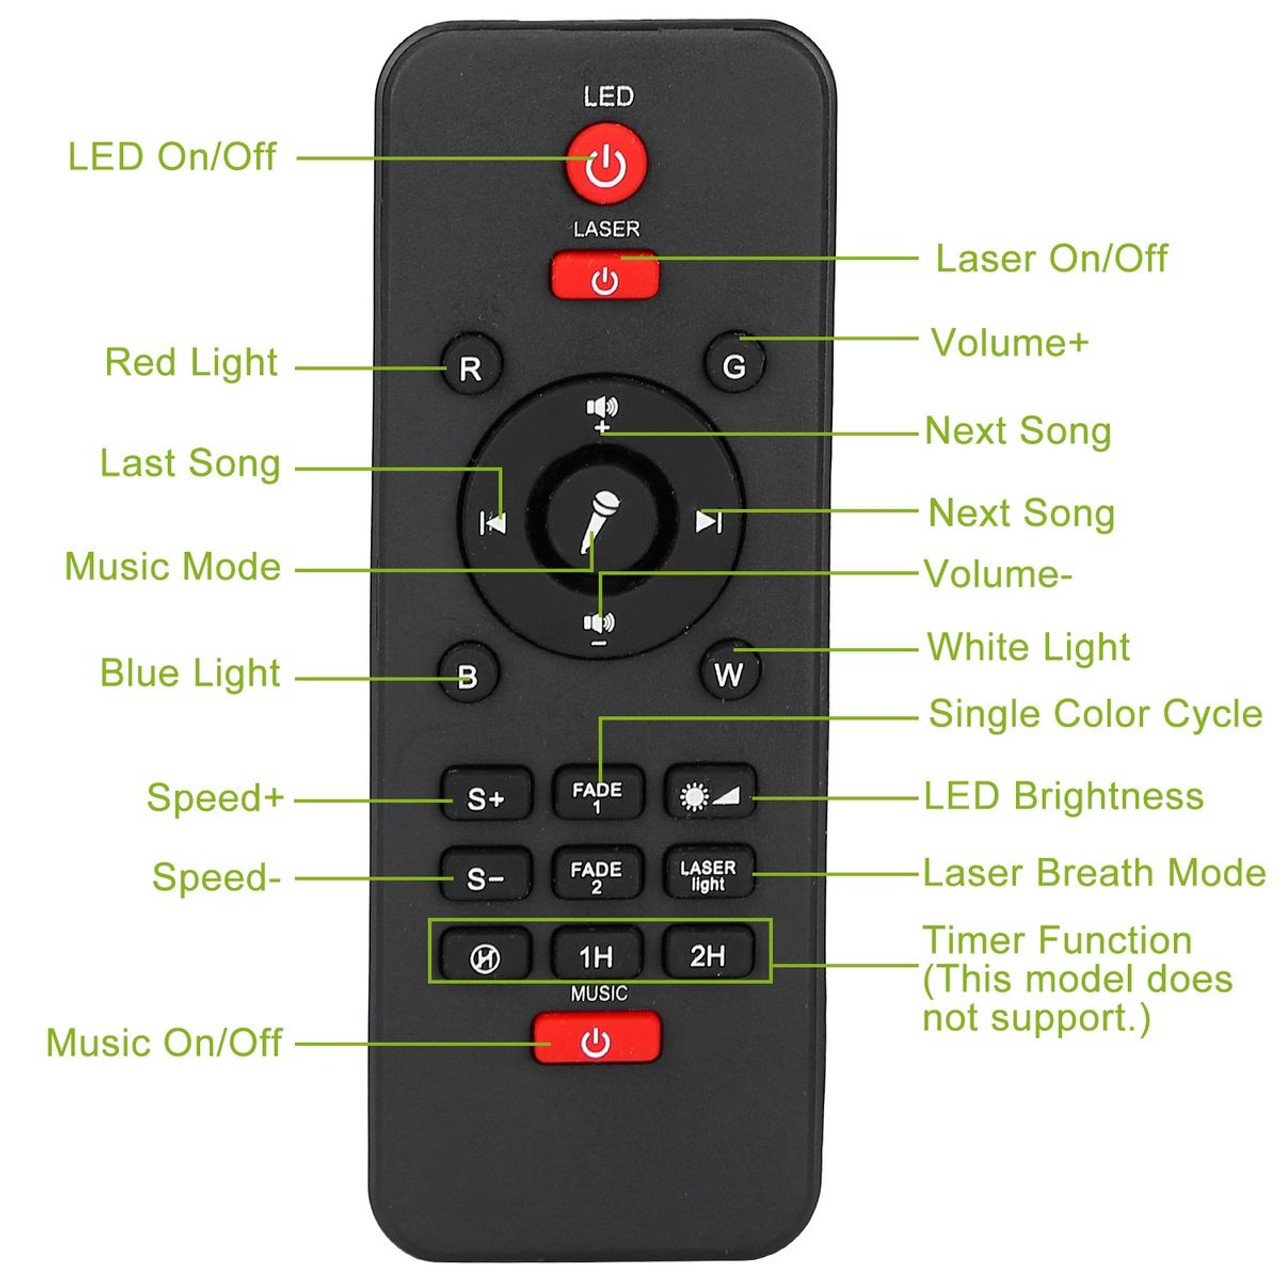 iMounTEK® Star Projector Lamp Wireless Speaker product image